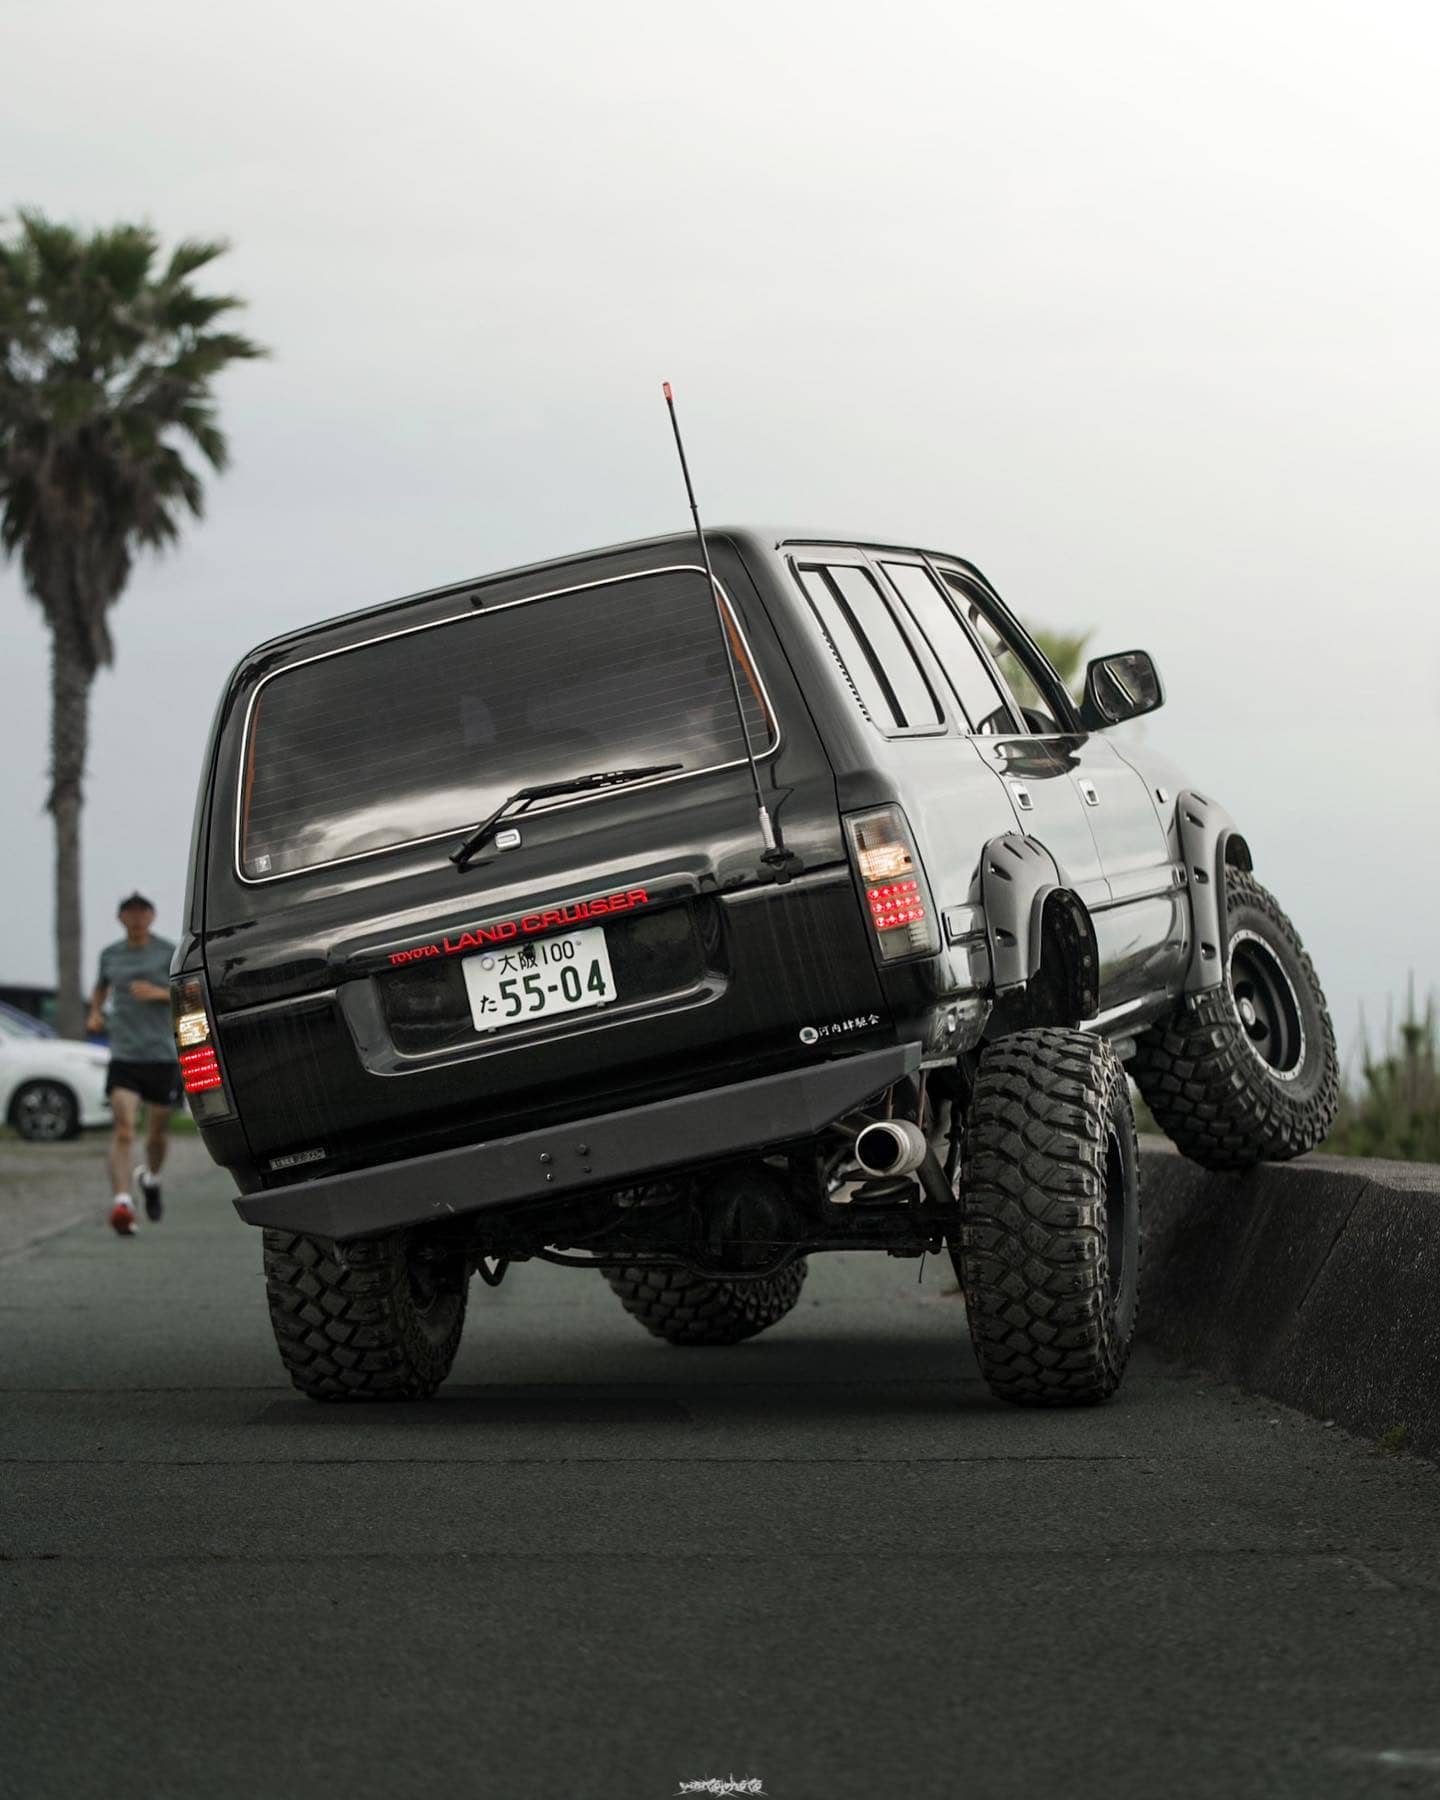 Toyota Land Cruiser rock crawler with mud tires